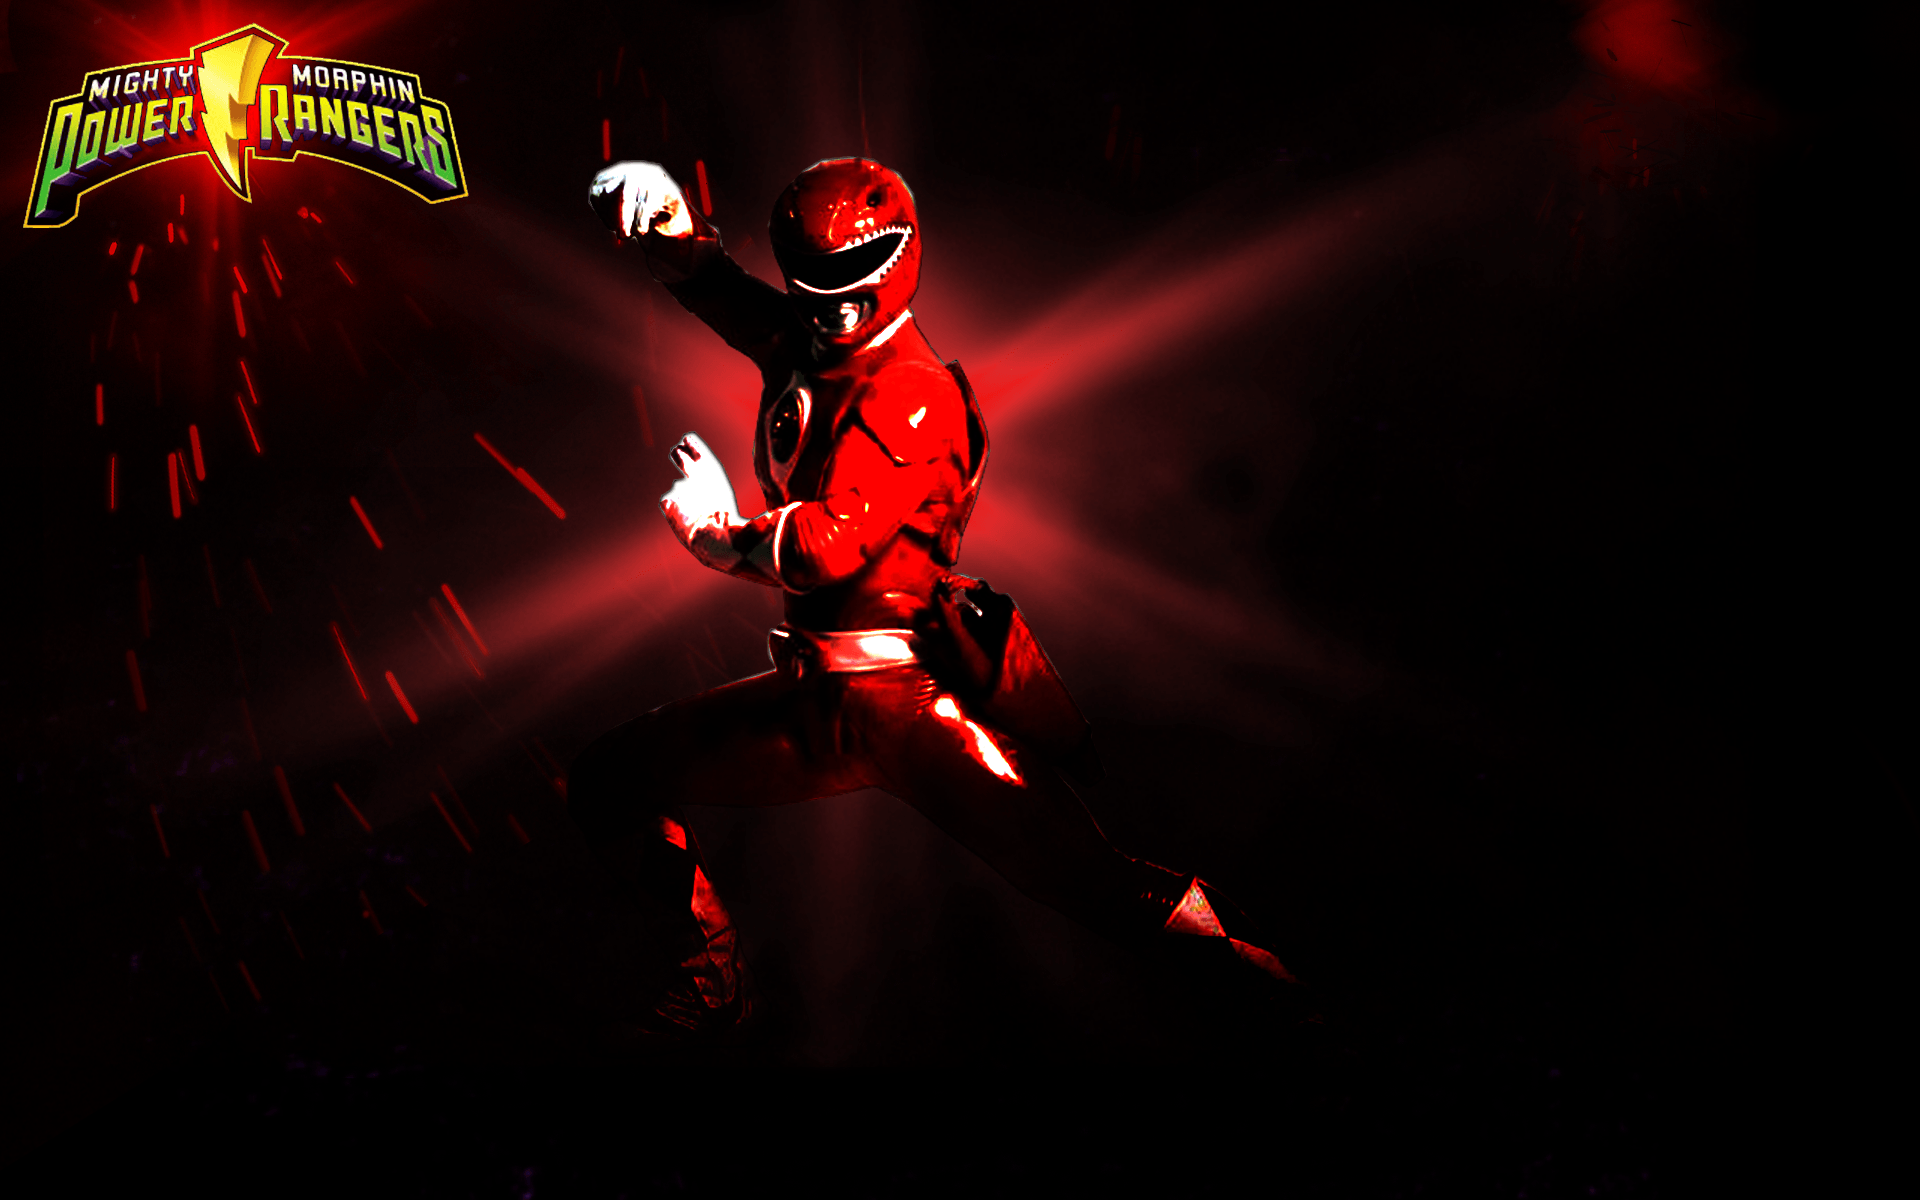 The Power Ranger image PR Red ranger HD wallpaper and background